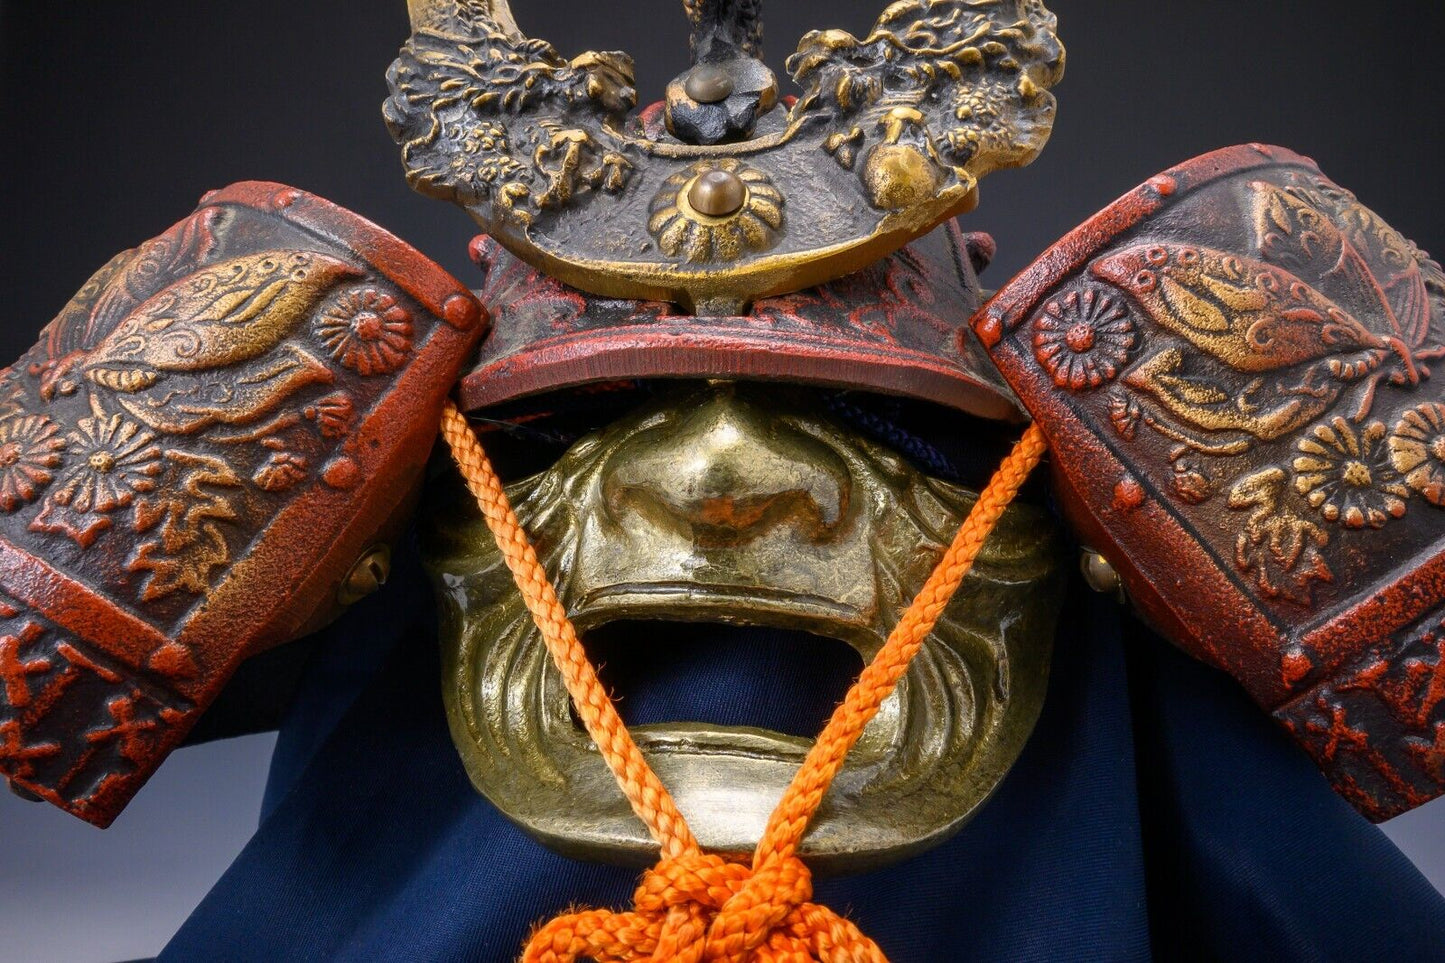 Collectible Japanese Warrior Kabuto Helmet Vintage Historical Display Armor Decor.